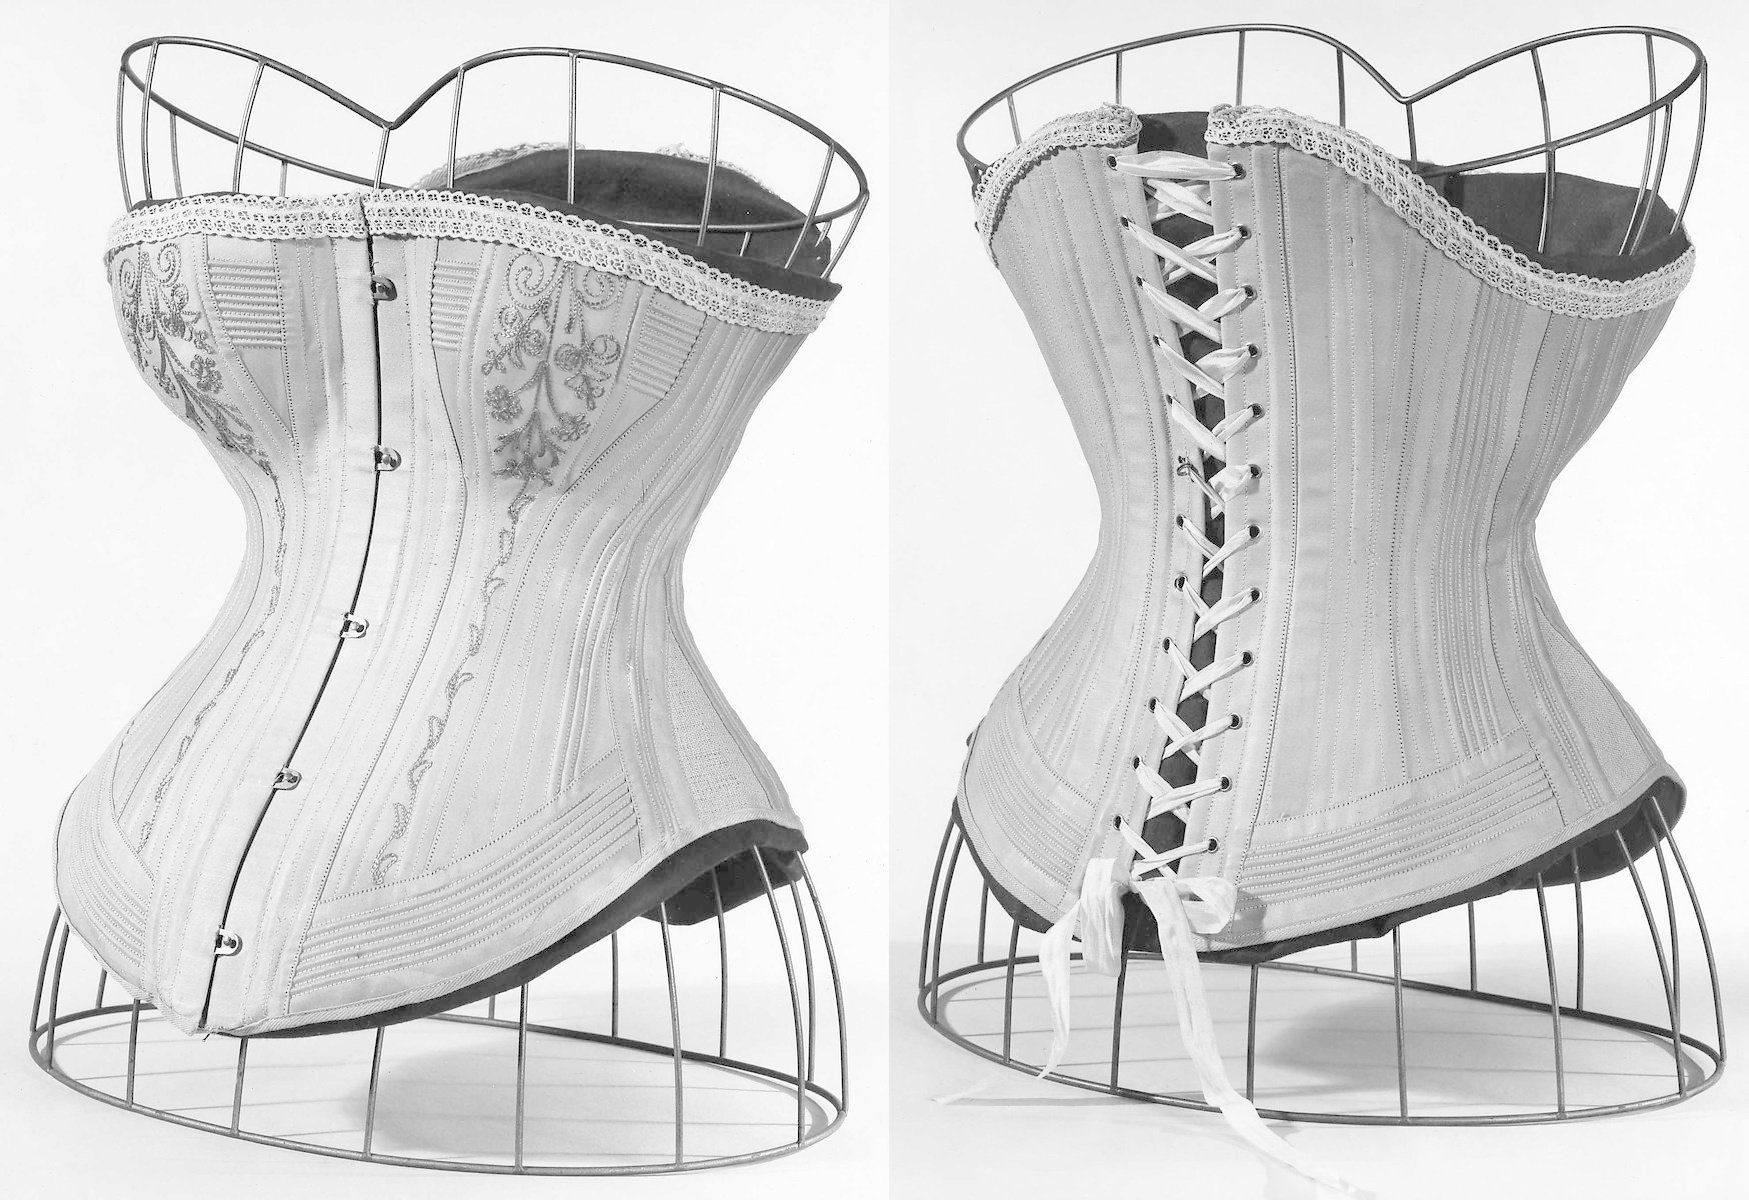 The Metropolitan Museum of Art - Corset  Corset, Victorian corset, Waist  cincher corset